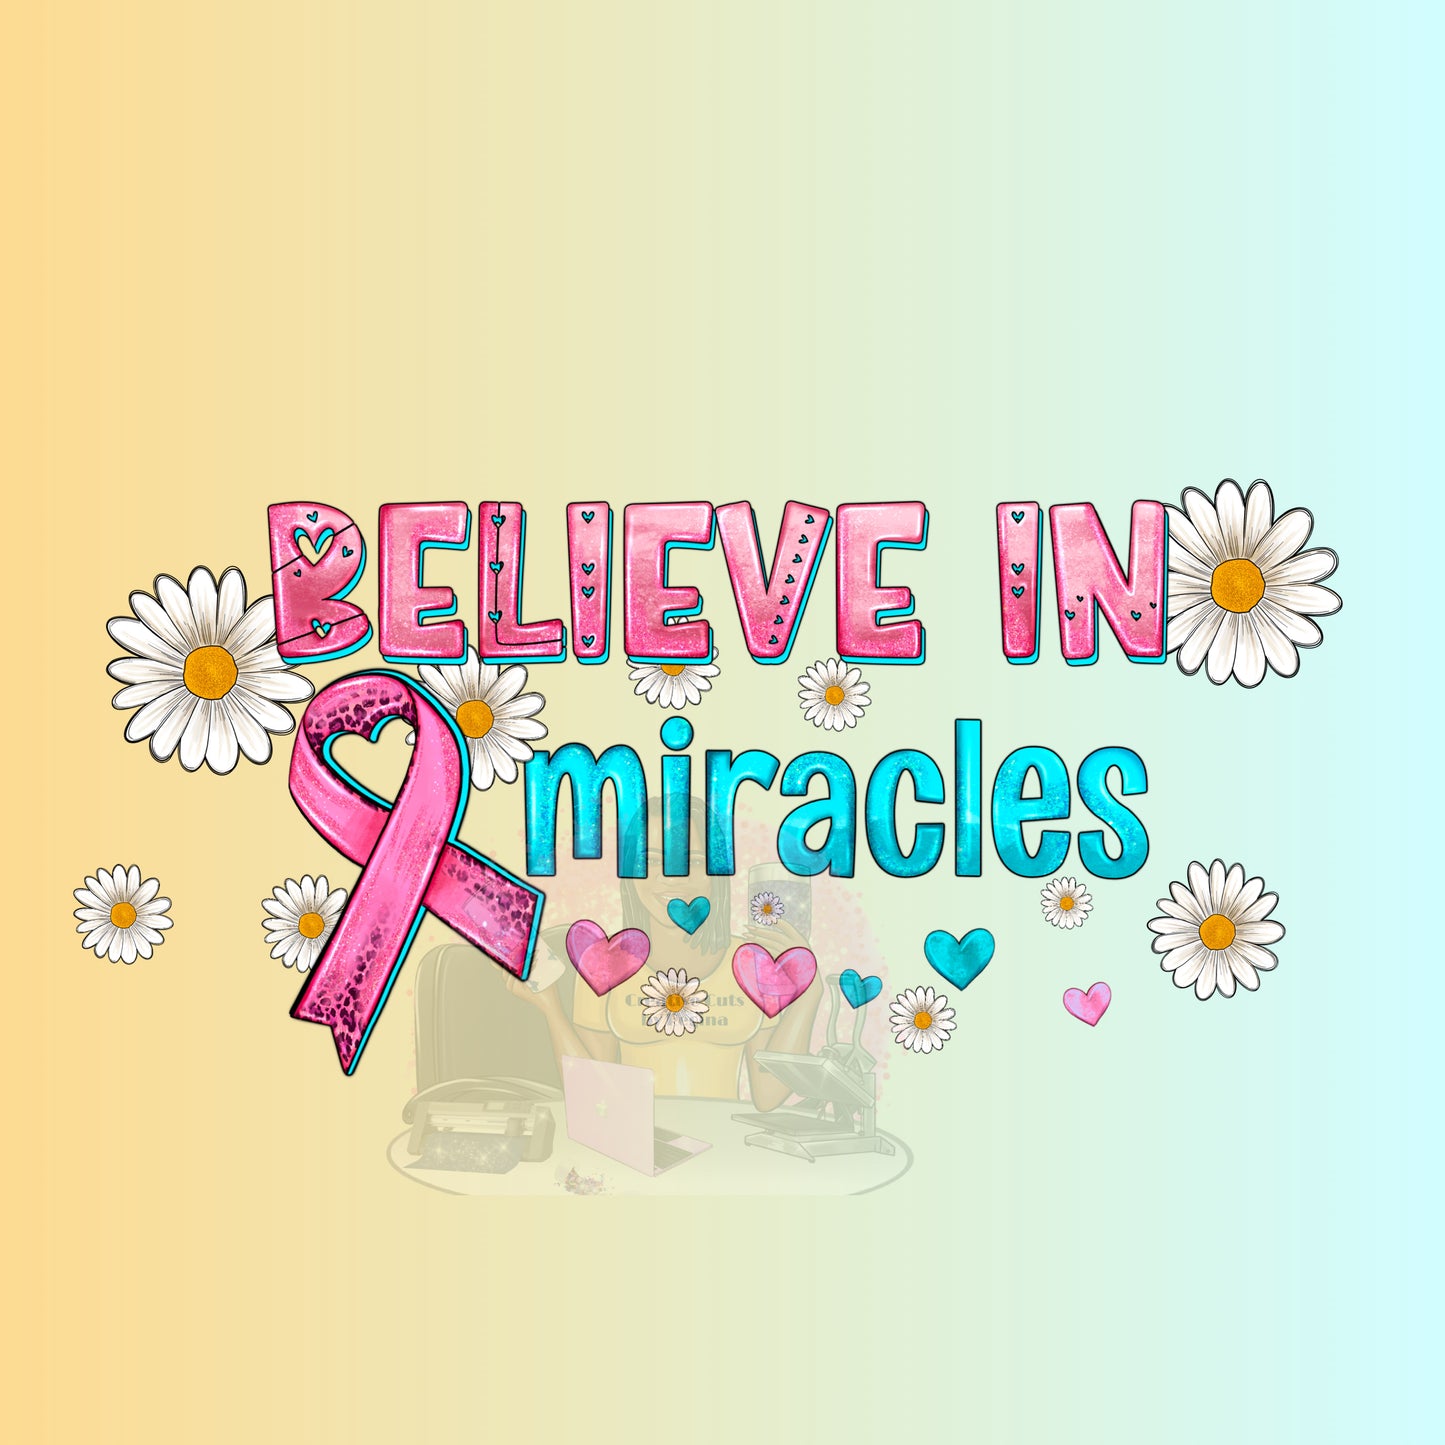 Believe_miracles